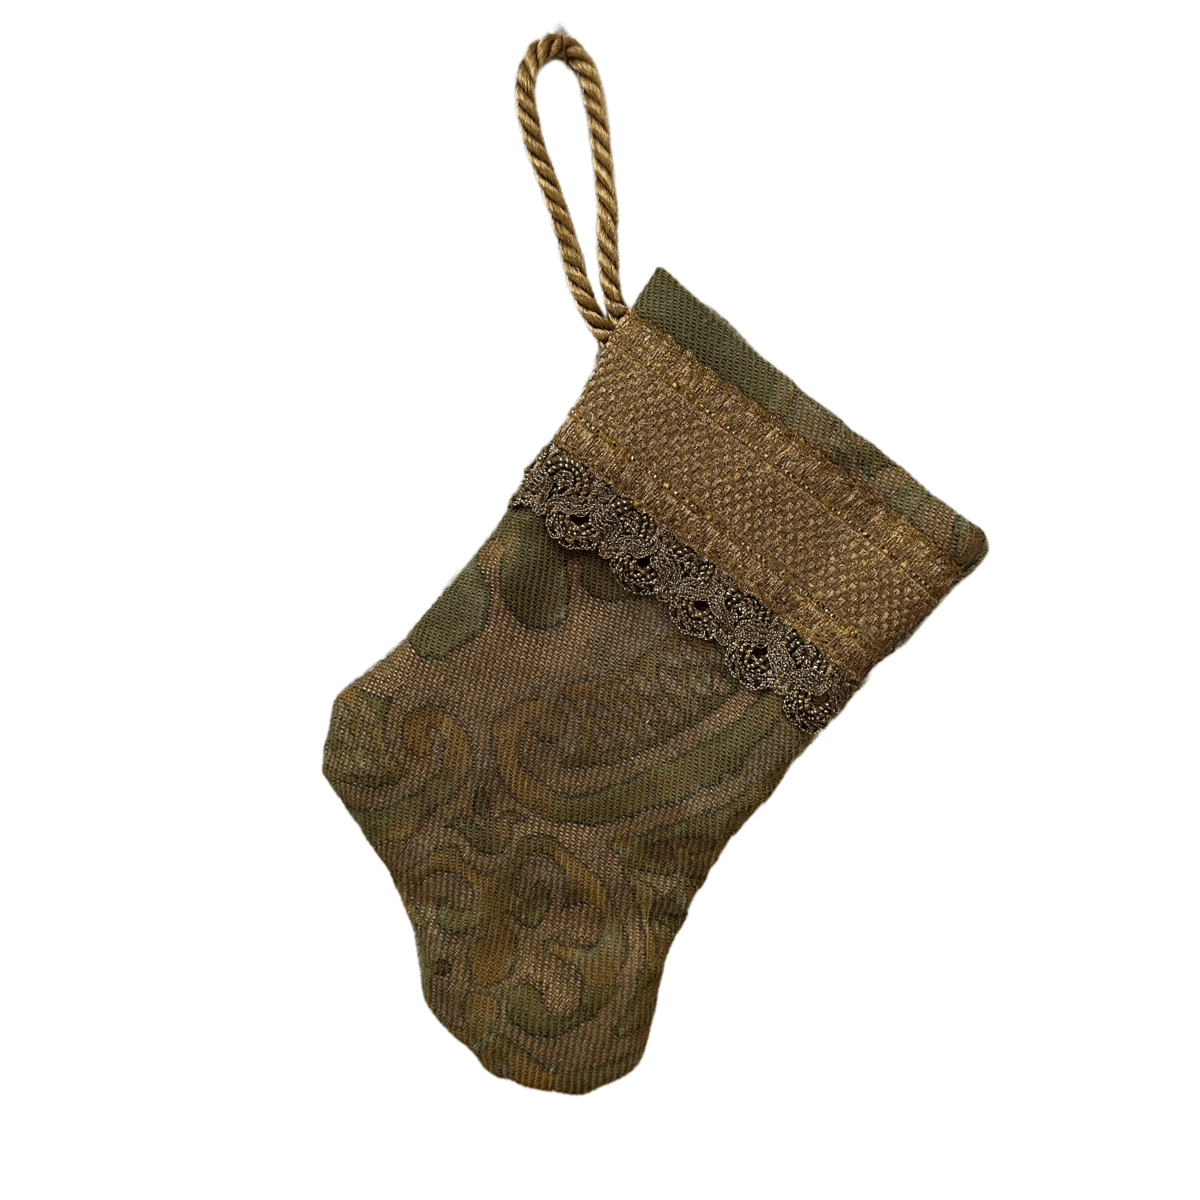 Handmade Mini Stocking Ornament from Antique & Vintage Textiles, Trims | Green Fortuny Ornament B. Viz Design G 